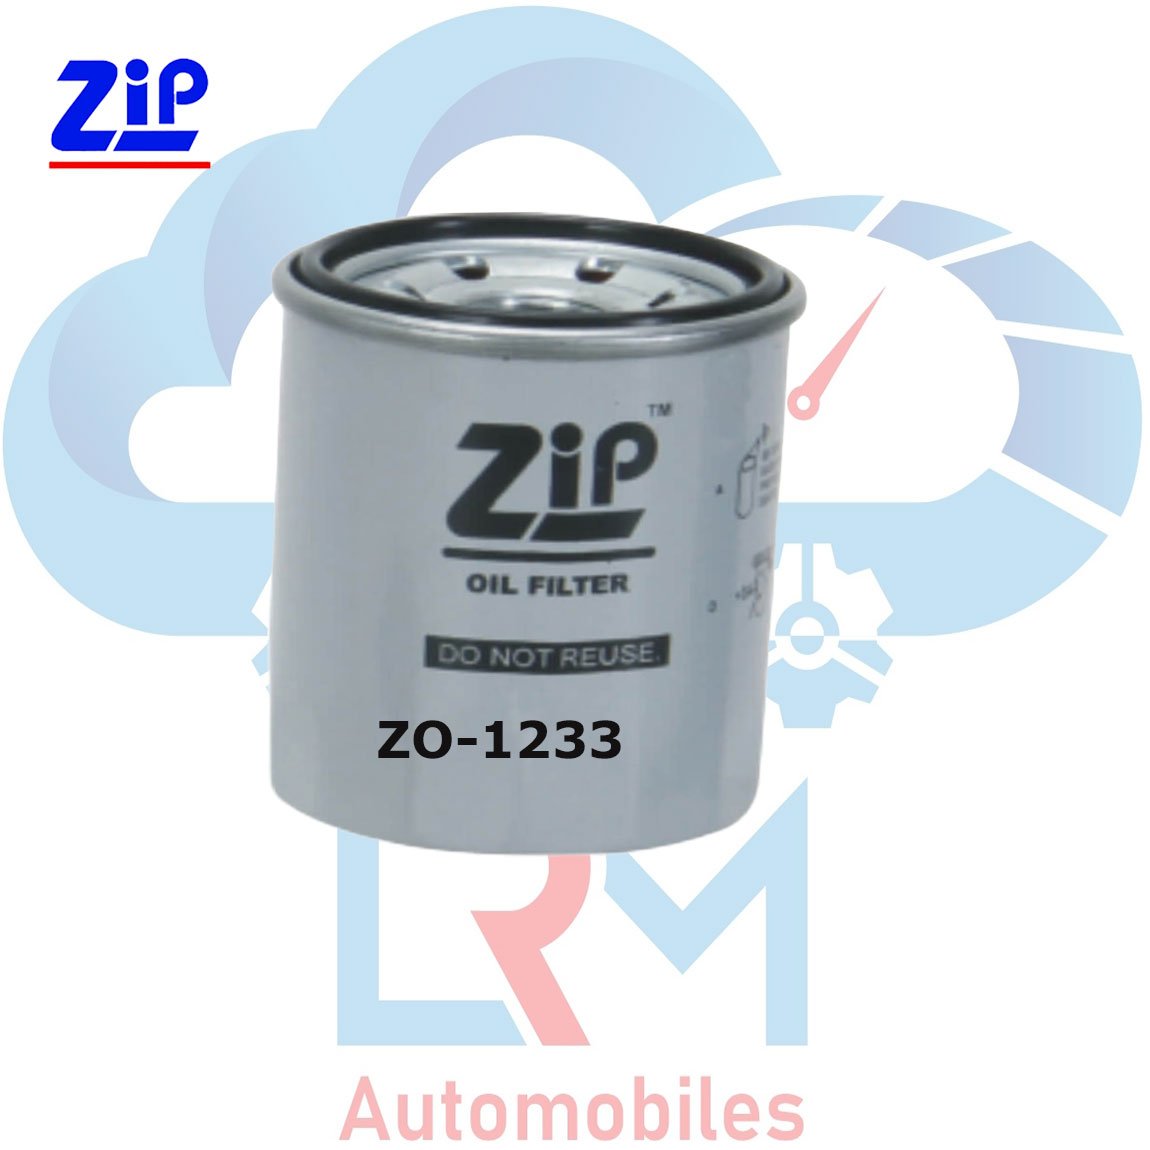 Oil Filter For Fiat Punto in Zip Filter